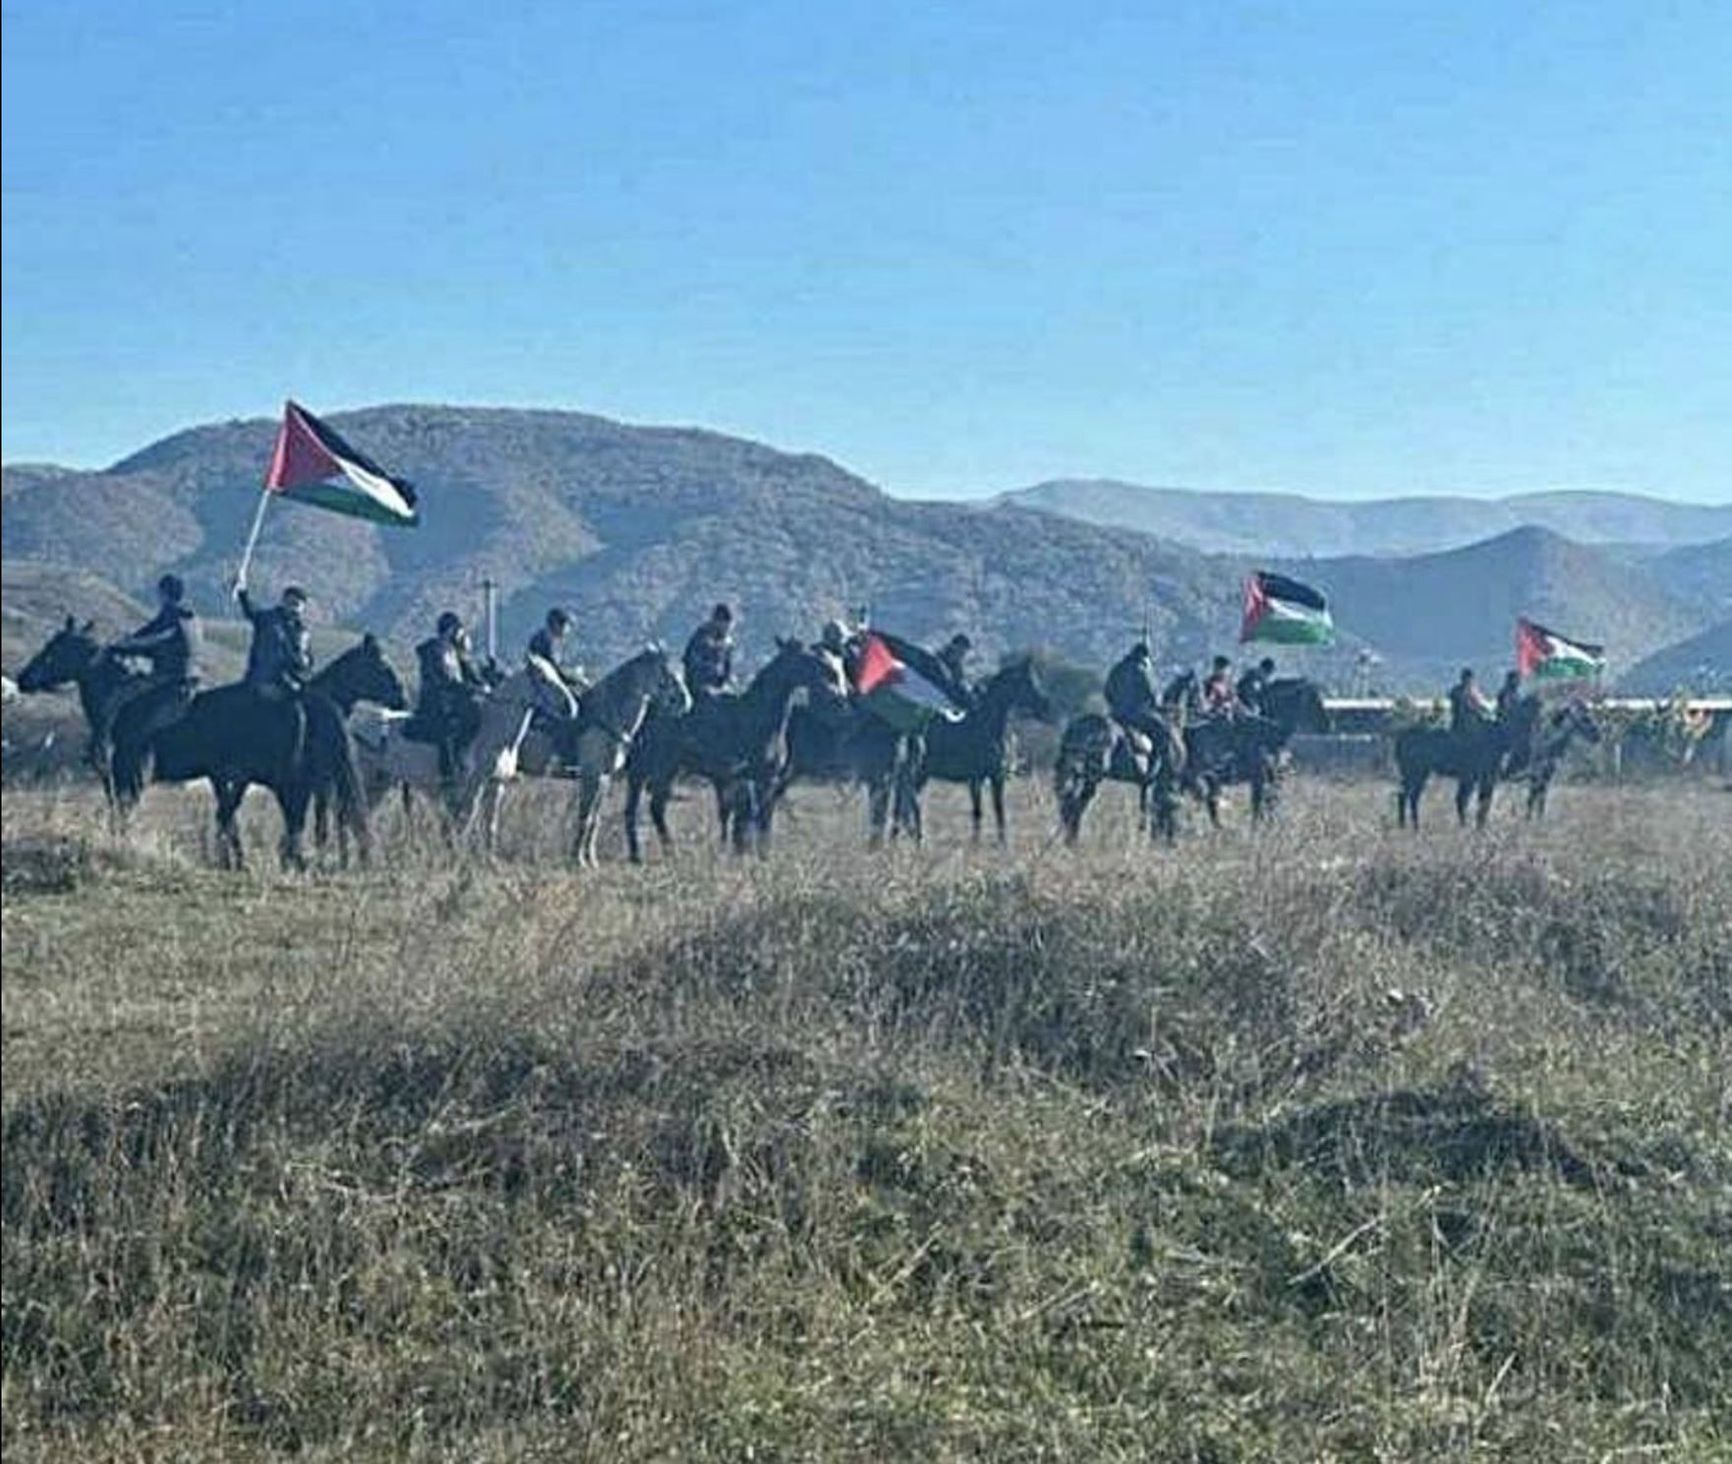 A rally in support of Palestine on horseback, held in Dagestan’s Karabudakhkent District